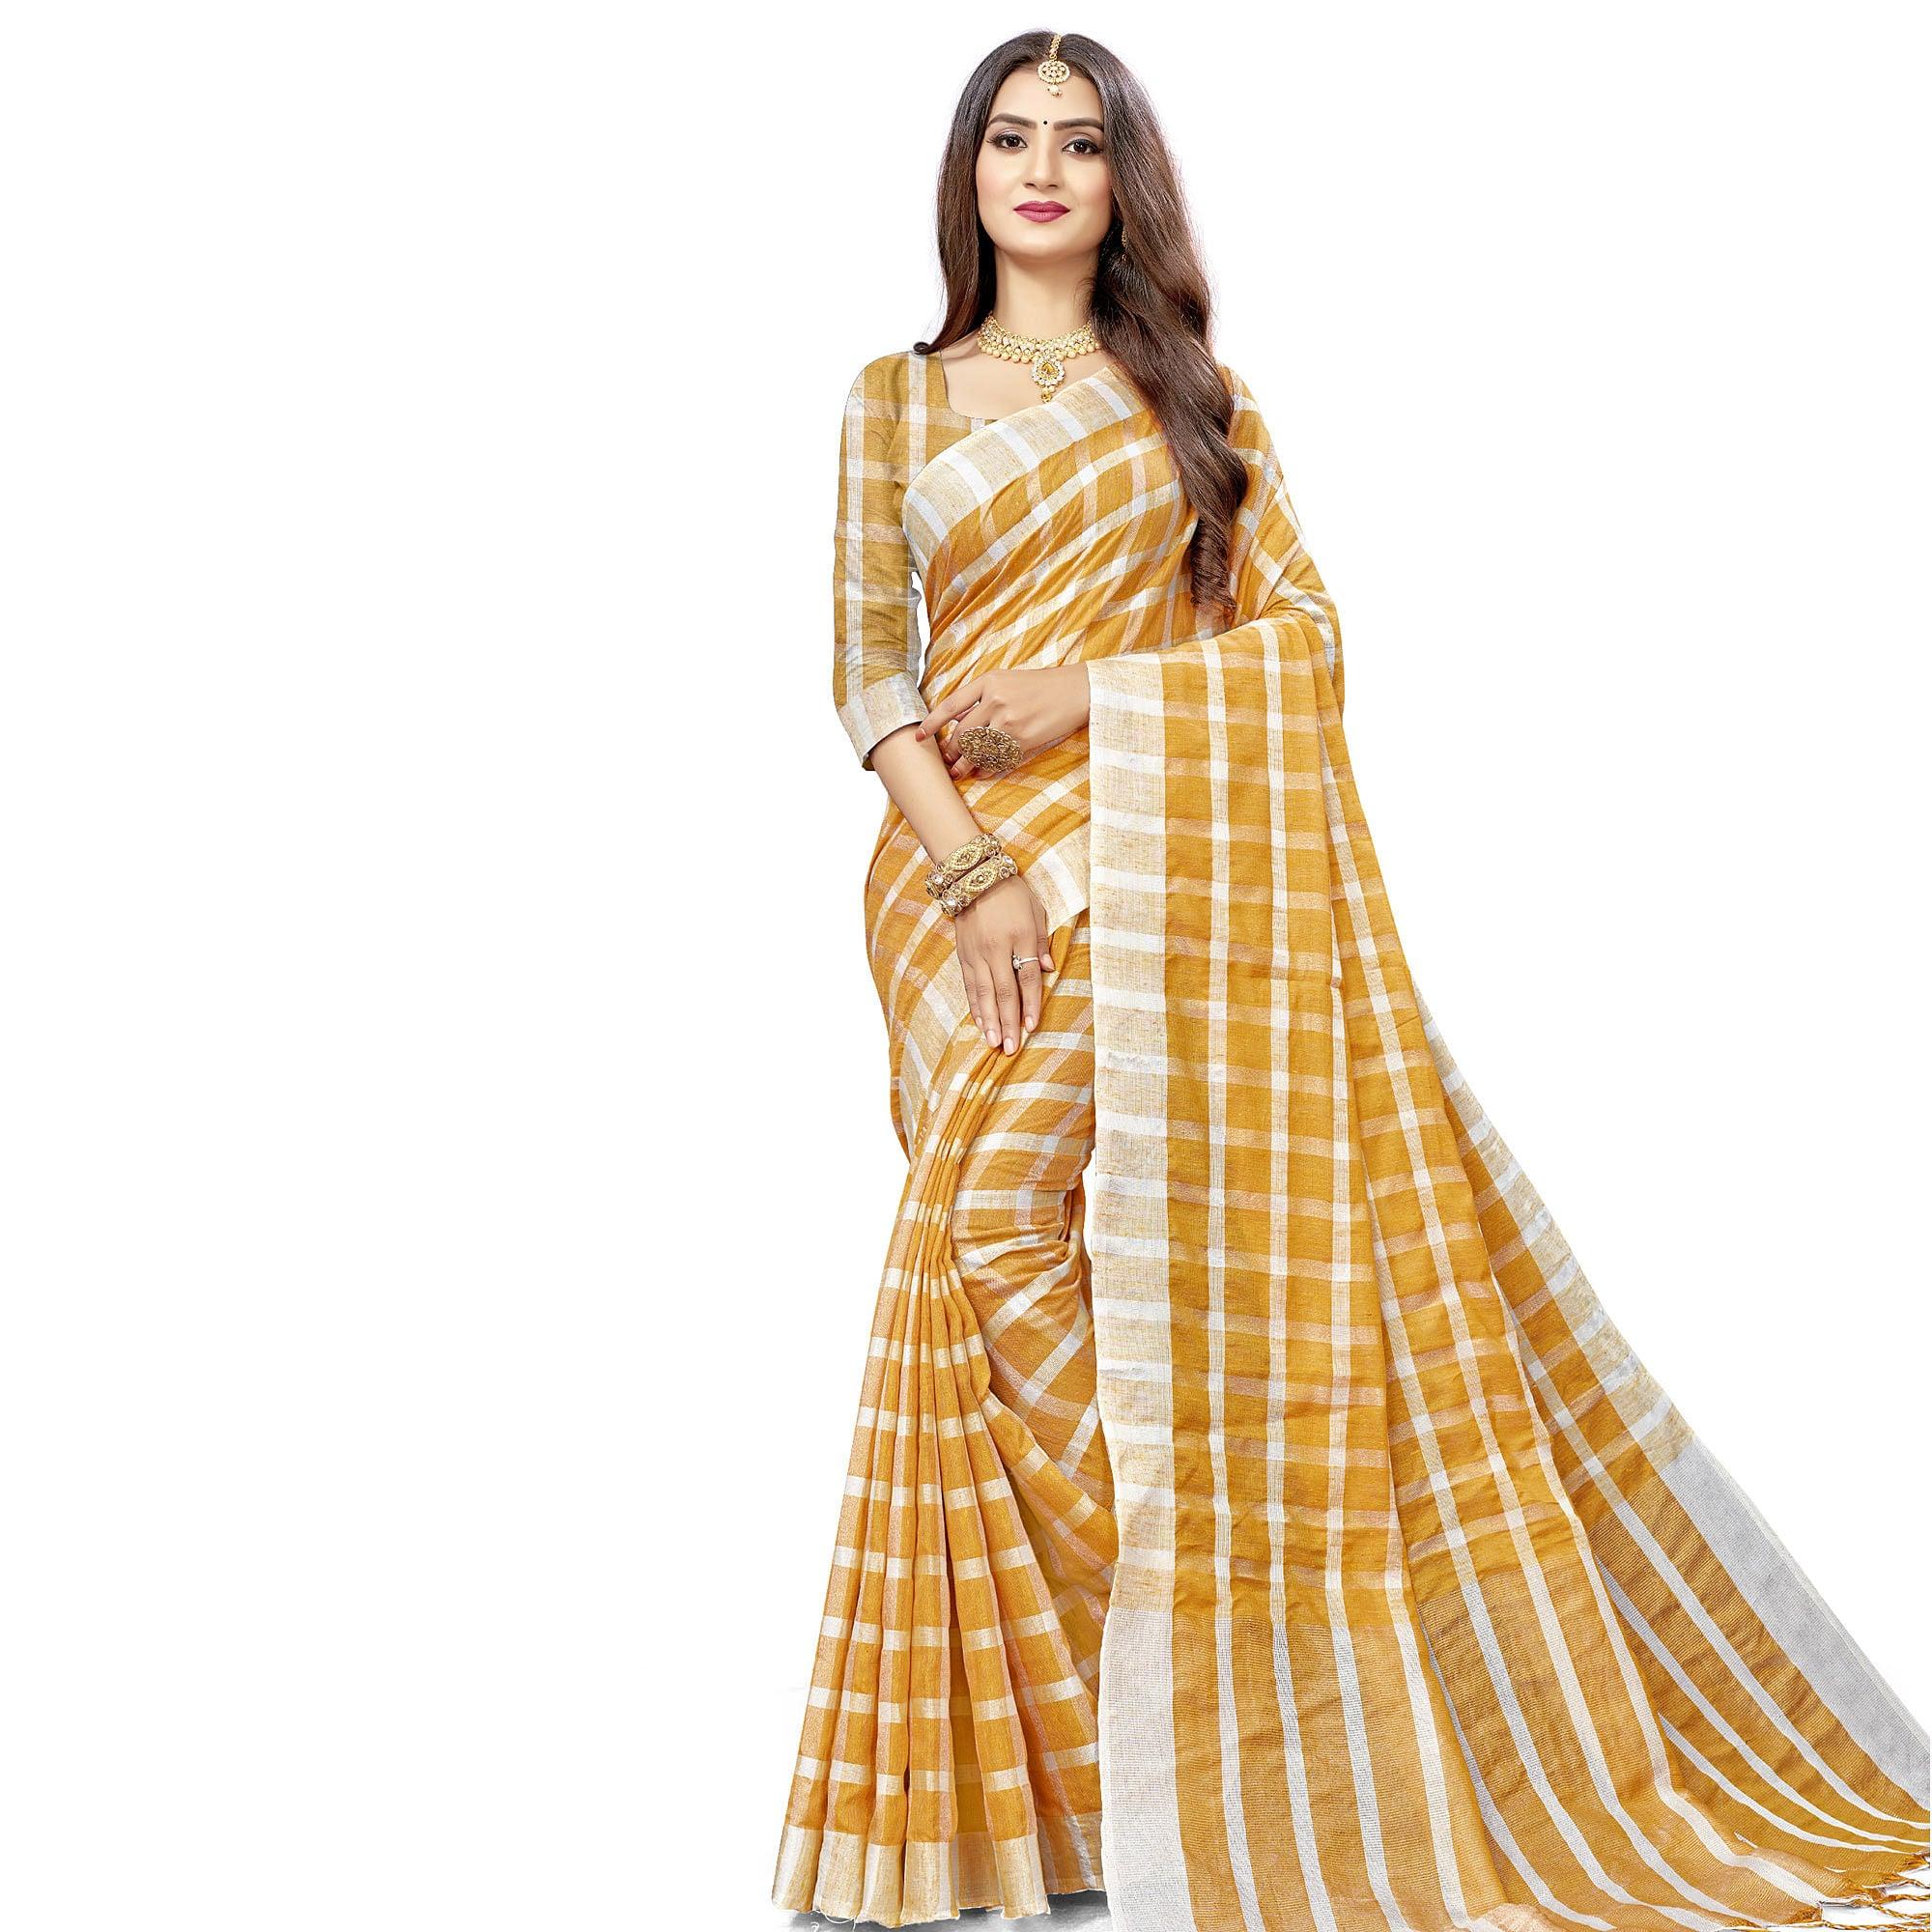 Alluring Mustard Yellow Colored Fesive Wear Checks Print Cotton Silk Saree With Tassels - Peachmode